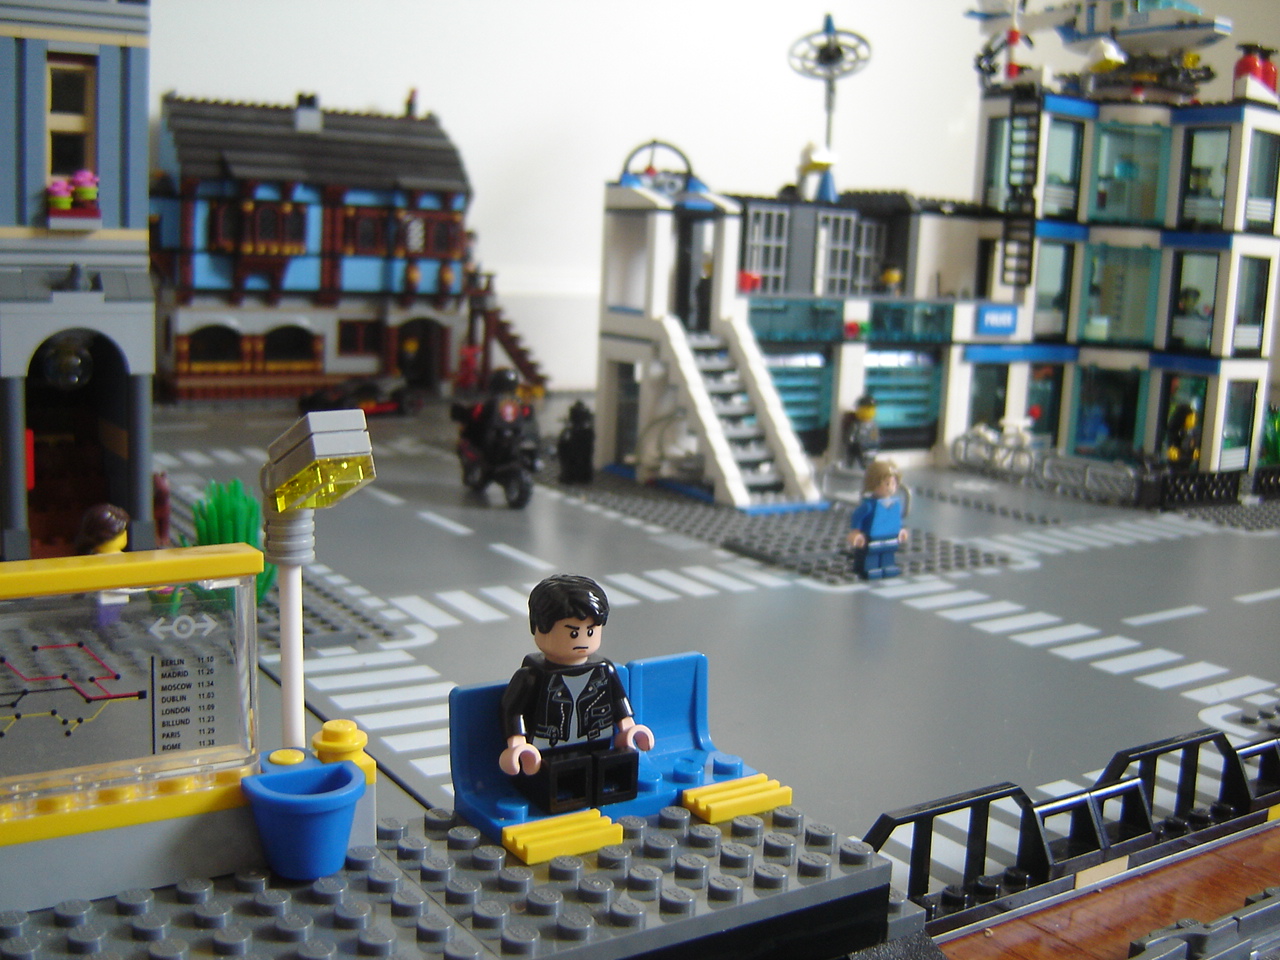 Lego City Background Scenery Image Gallery